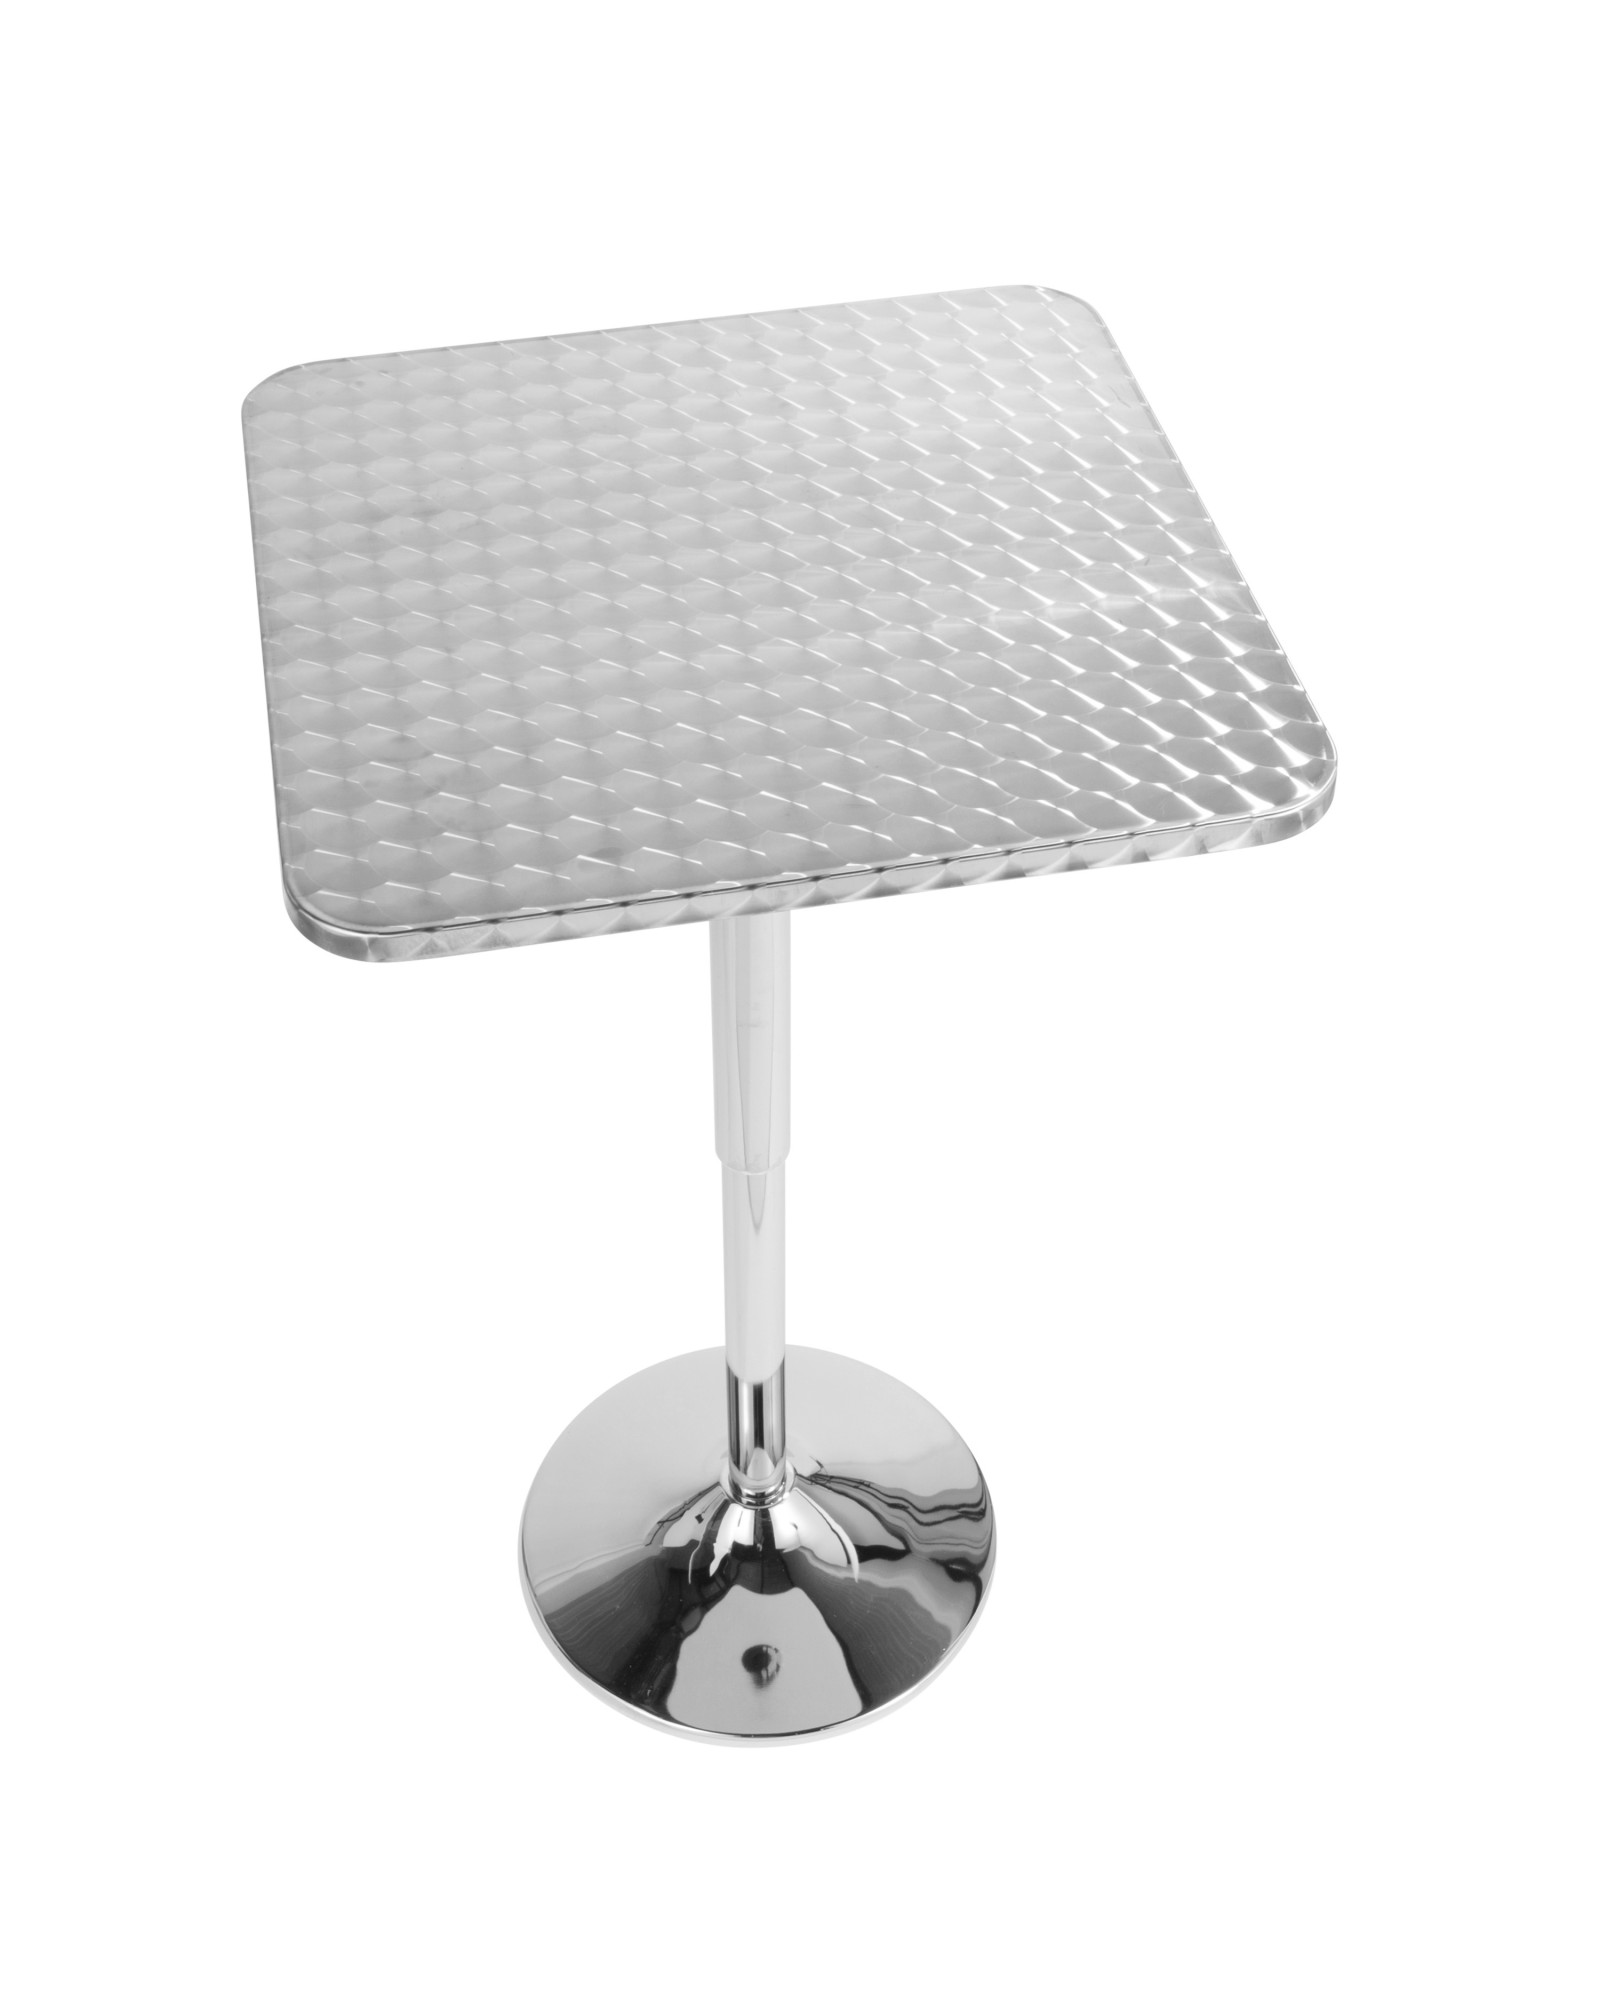 Bistro Contemporary Adjustable Square Bar Table in Silver